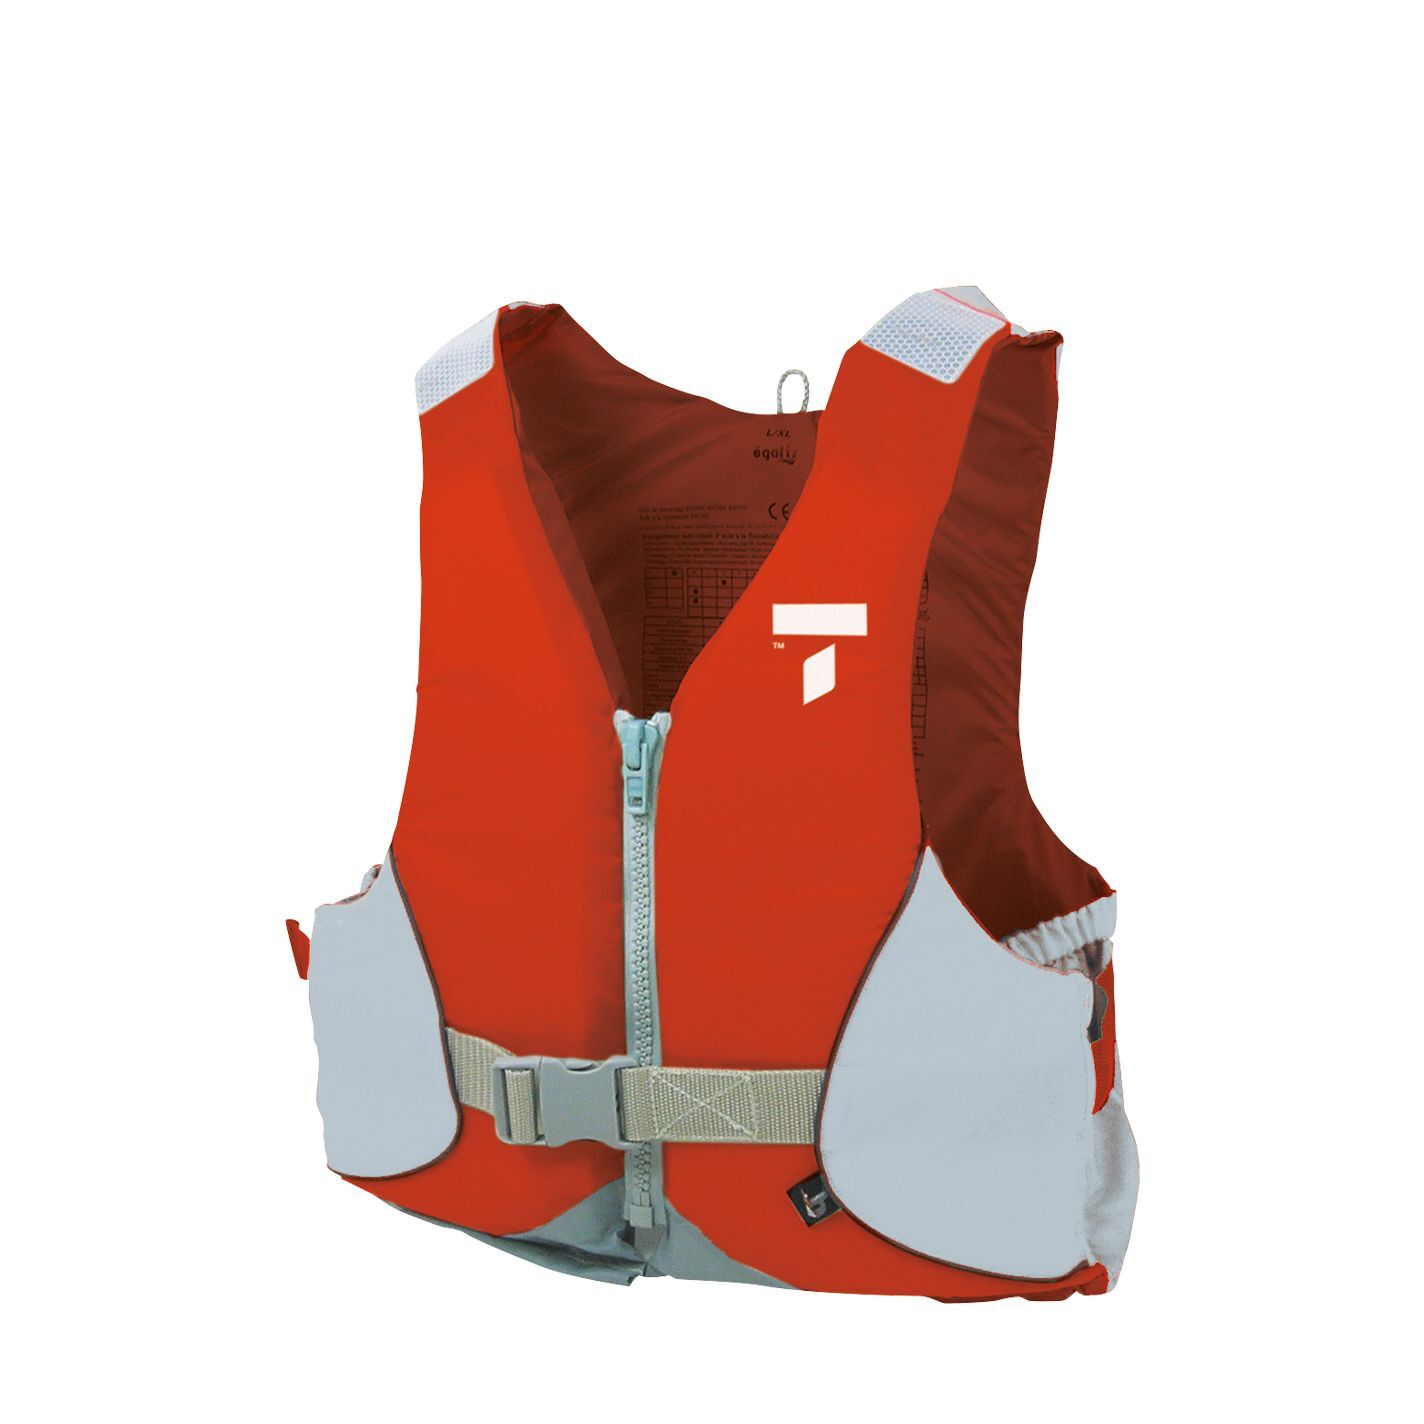 Tahe Outdoor Buoyancy Aid Brantome II - Swim vest